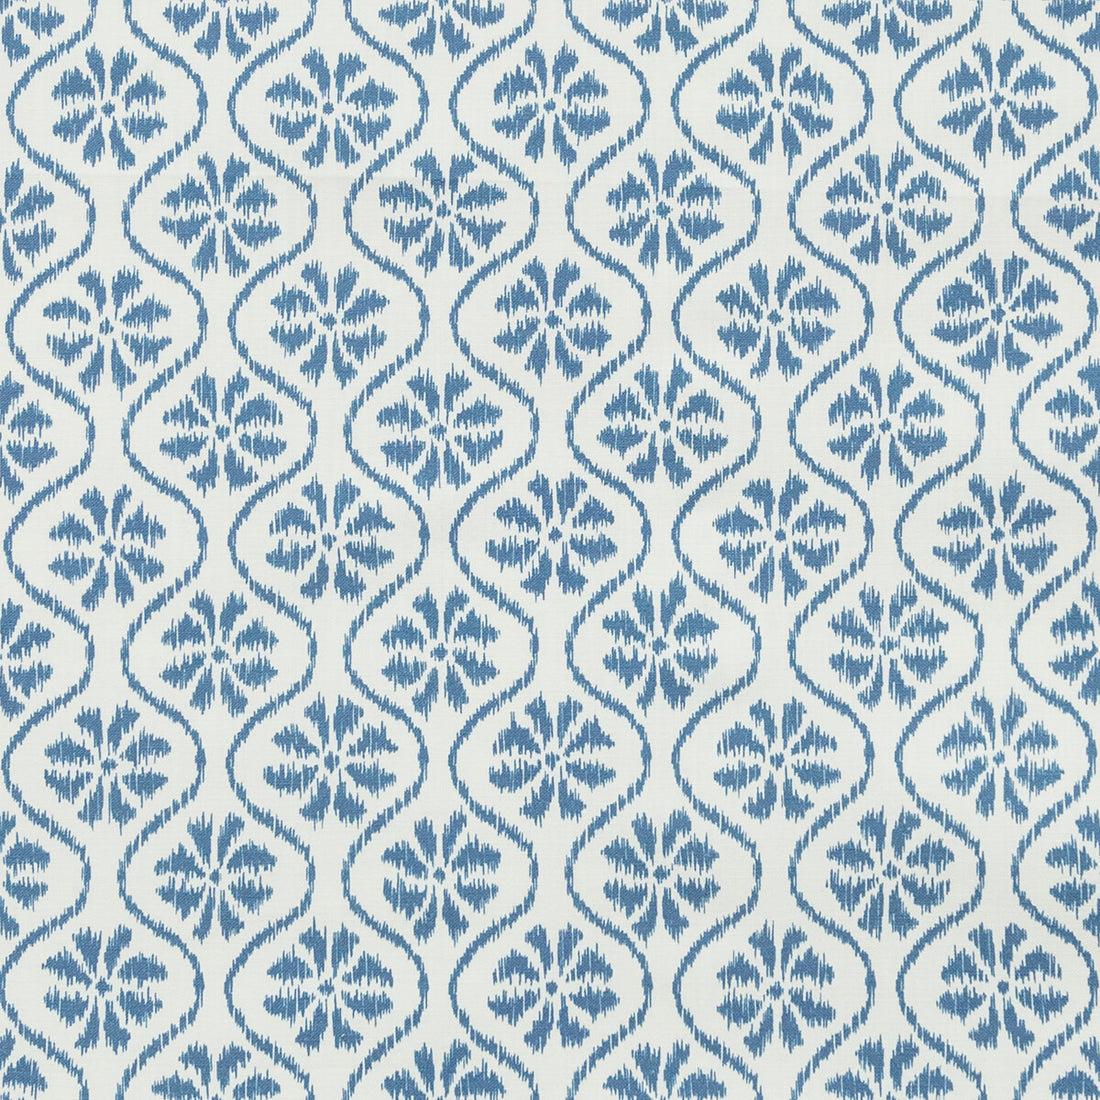 Talara fabric in bluebird color - pattern TALARA.15.0 - by Kravet Basics in the Ceylon collection